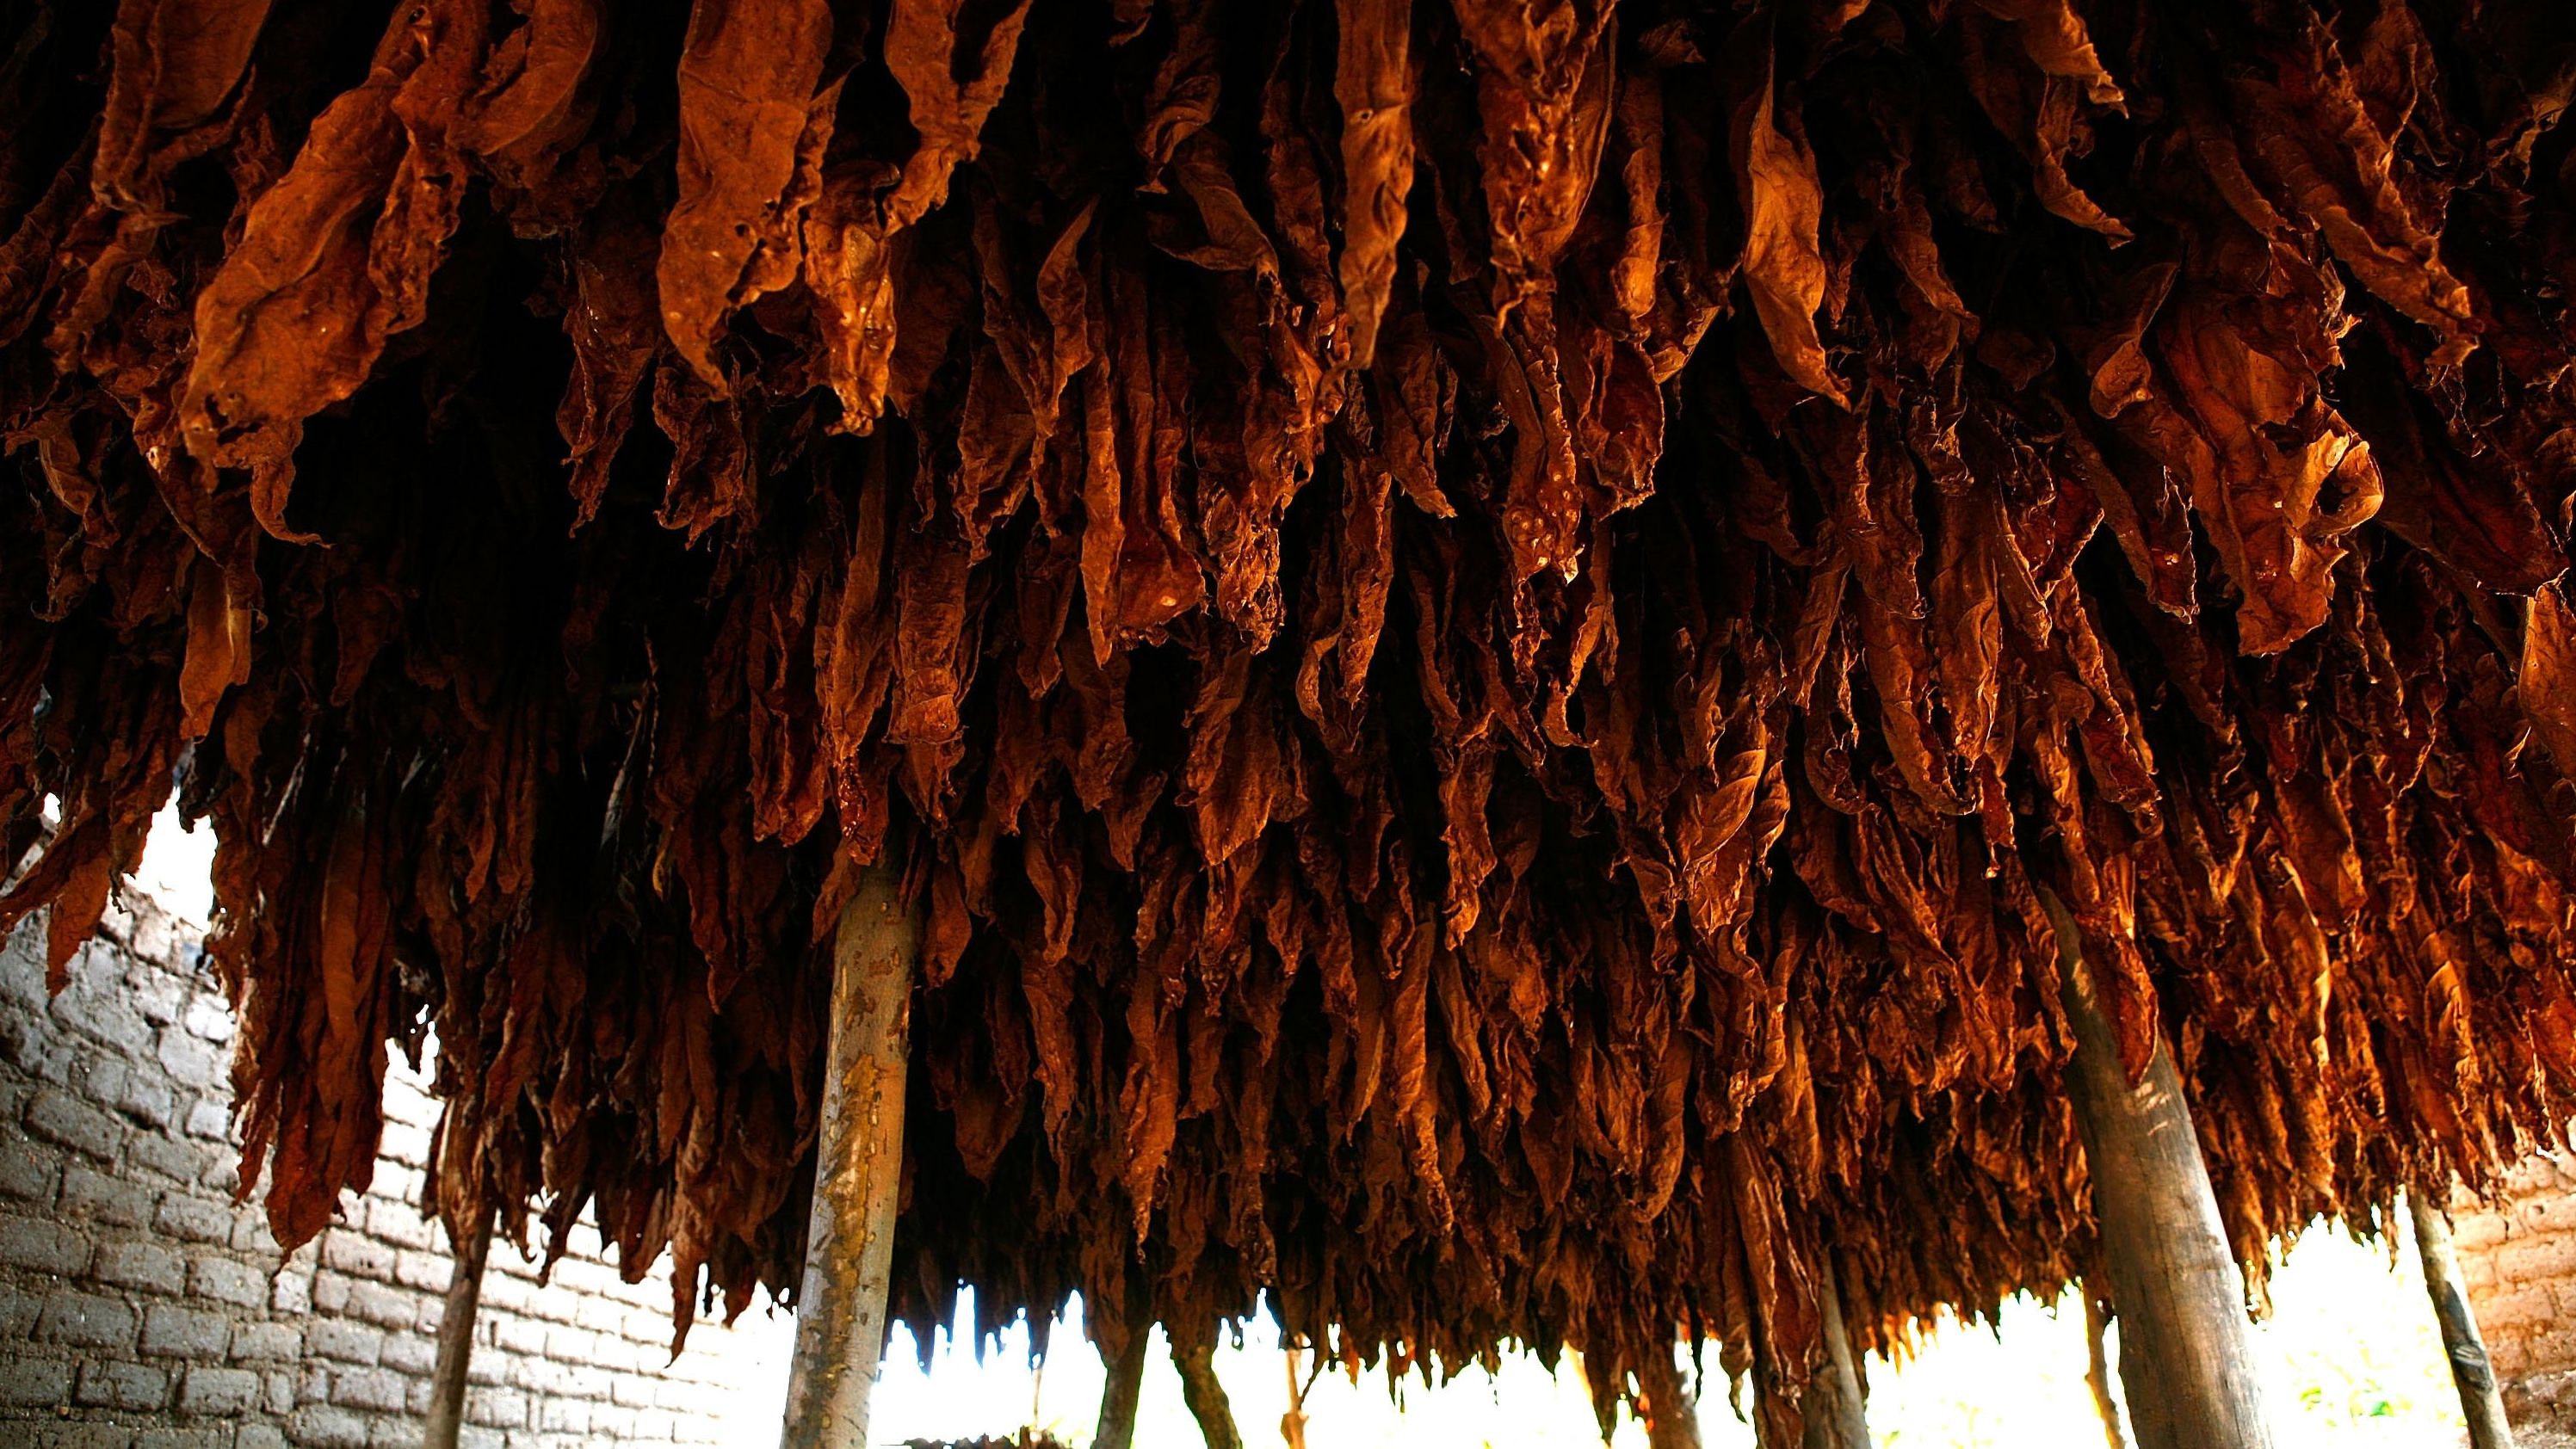  Tobacco, Malawi's biggest export, hangs April 5, 2009 in Chinkota Village, Lilongwe, Malawi.